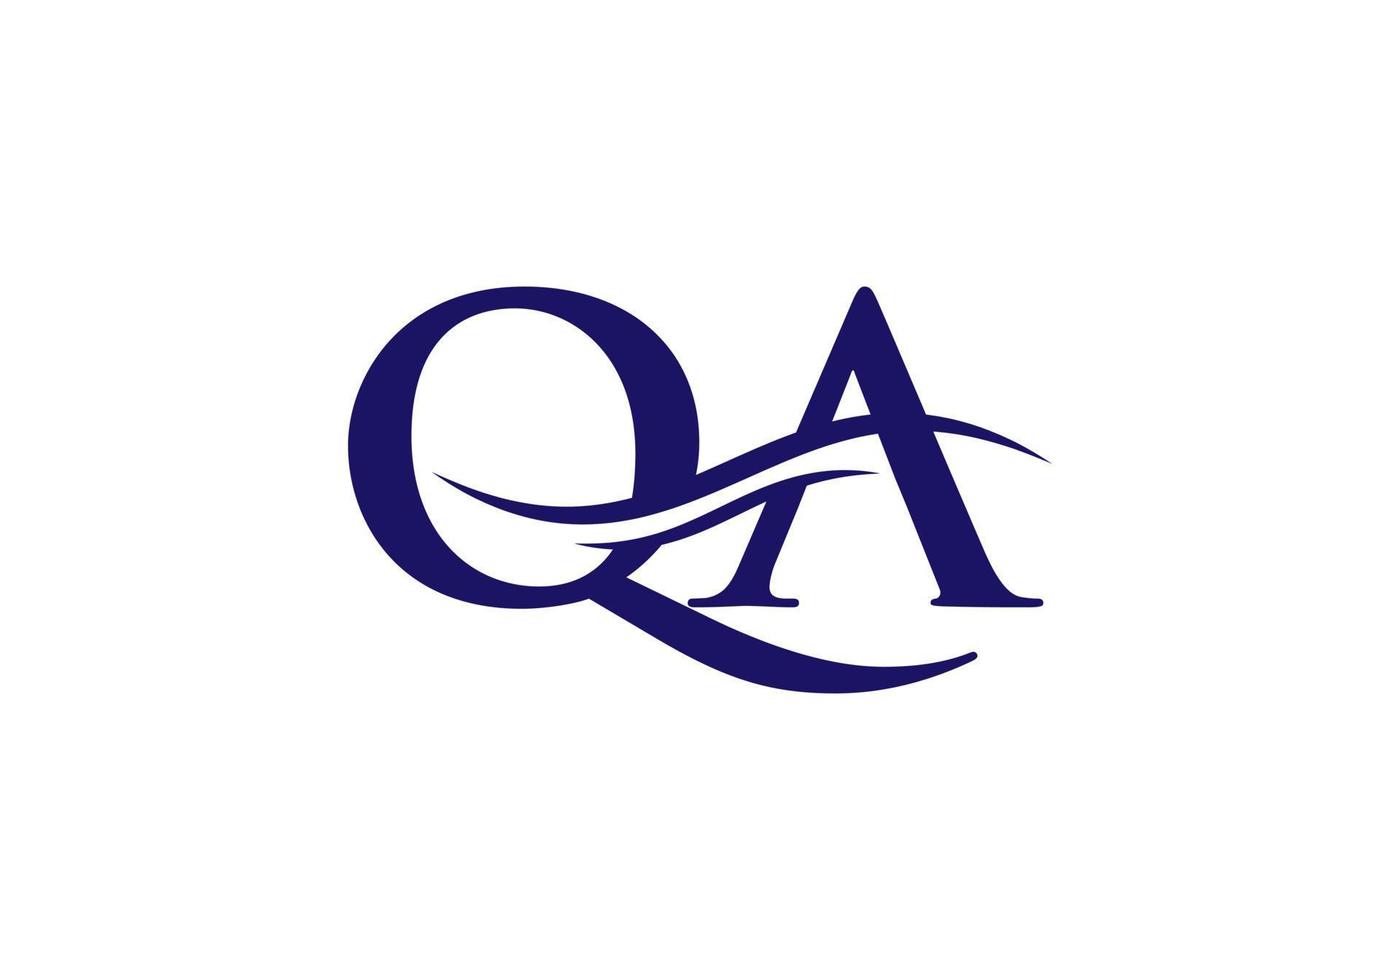 qa logo design. iniziale qa lettera logo vettore. swoosh lettera qa logo design vettore